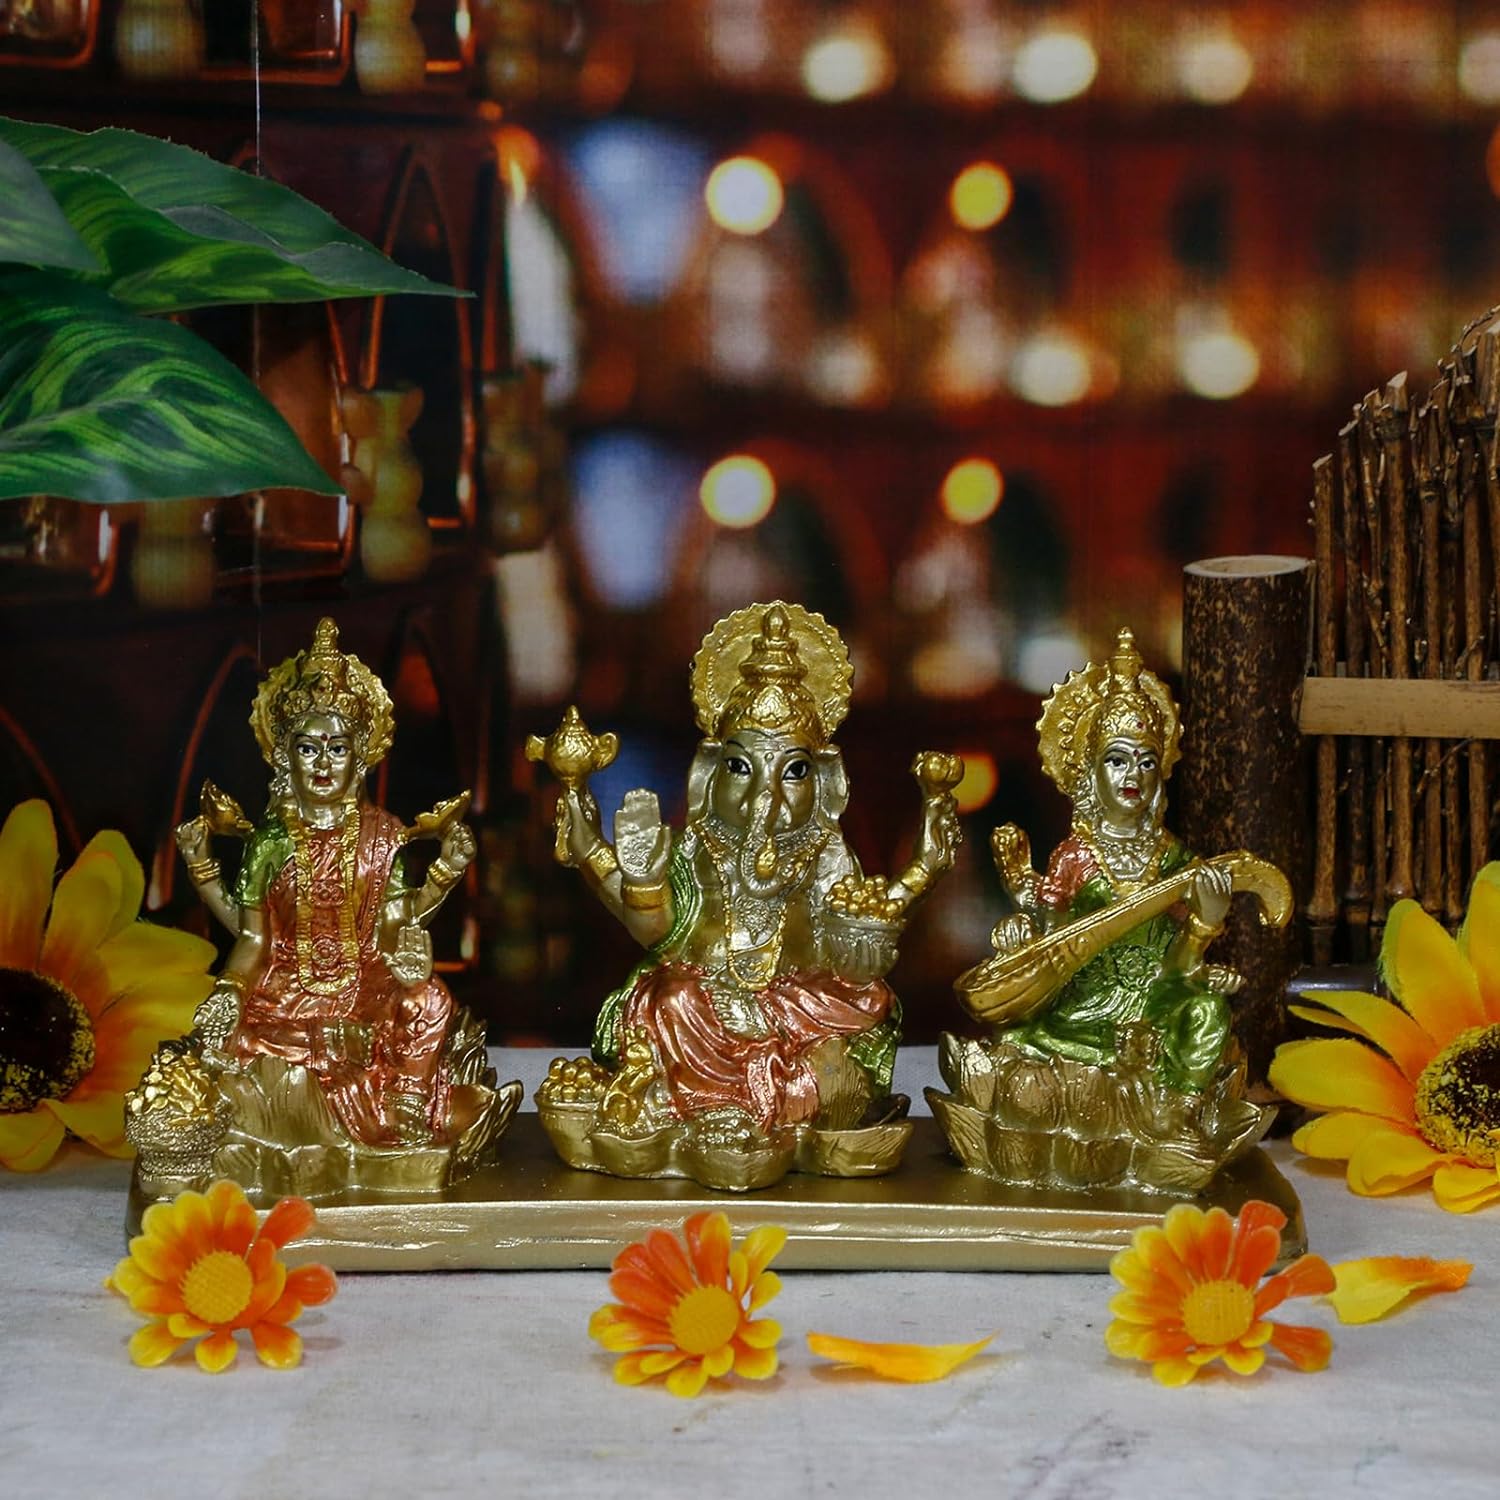 Hinduism Lakshmi Ganesha Saraswati Statue - Hindu Laxmi Lord Ganesh Idol Figurine Home Temple Mandir Pooja Item - Indian Puja Decoration Diwali Gift Meditation Yoga Room Altar Decoration Car Decor